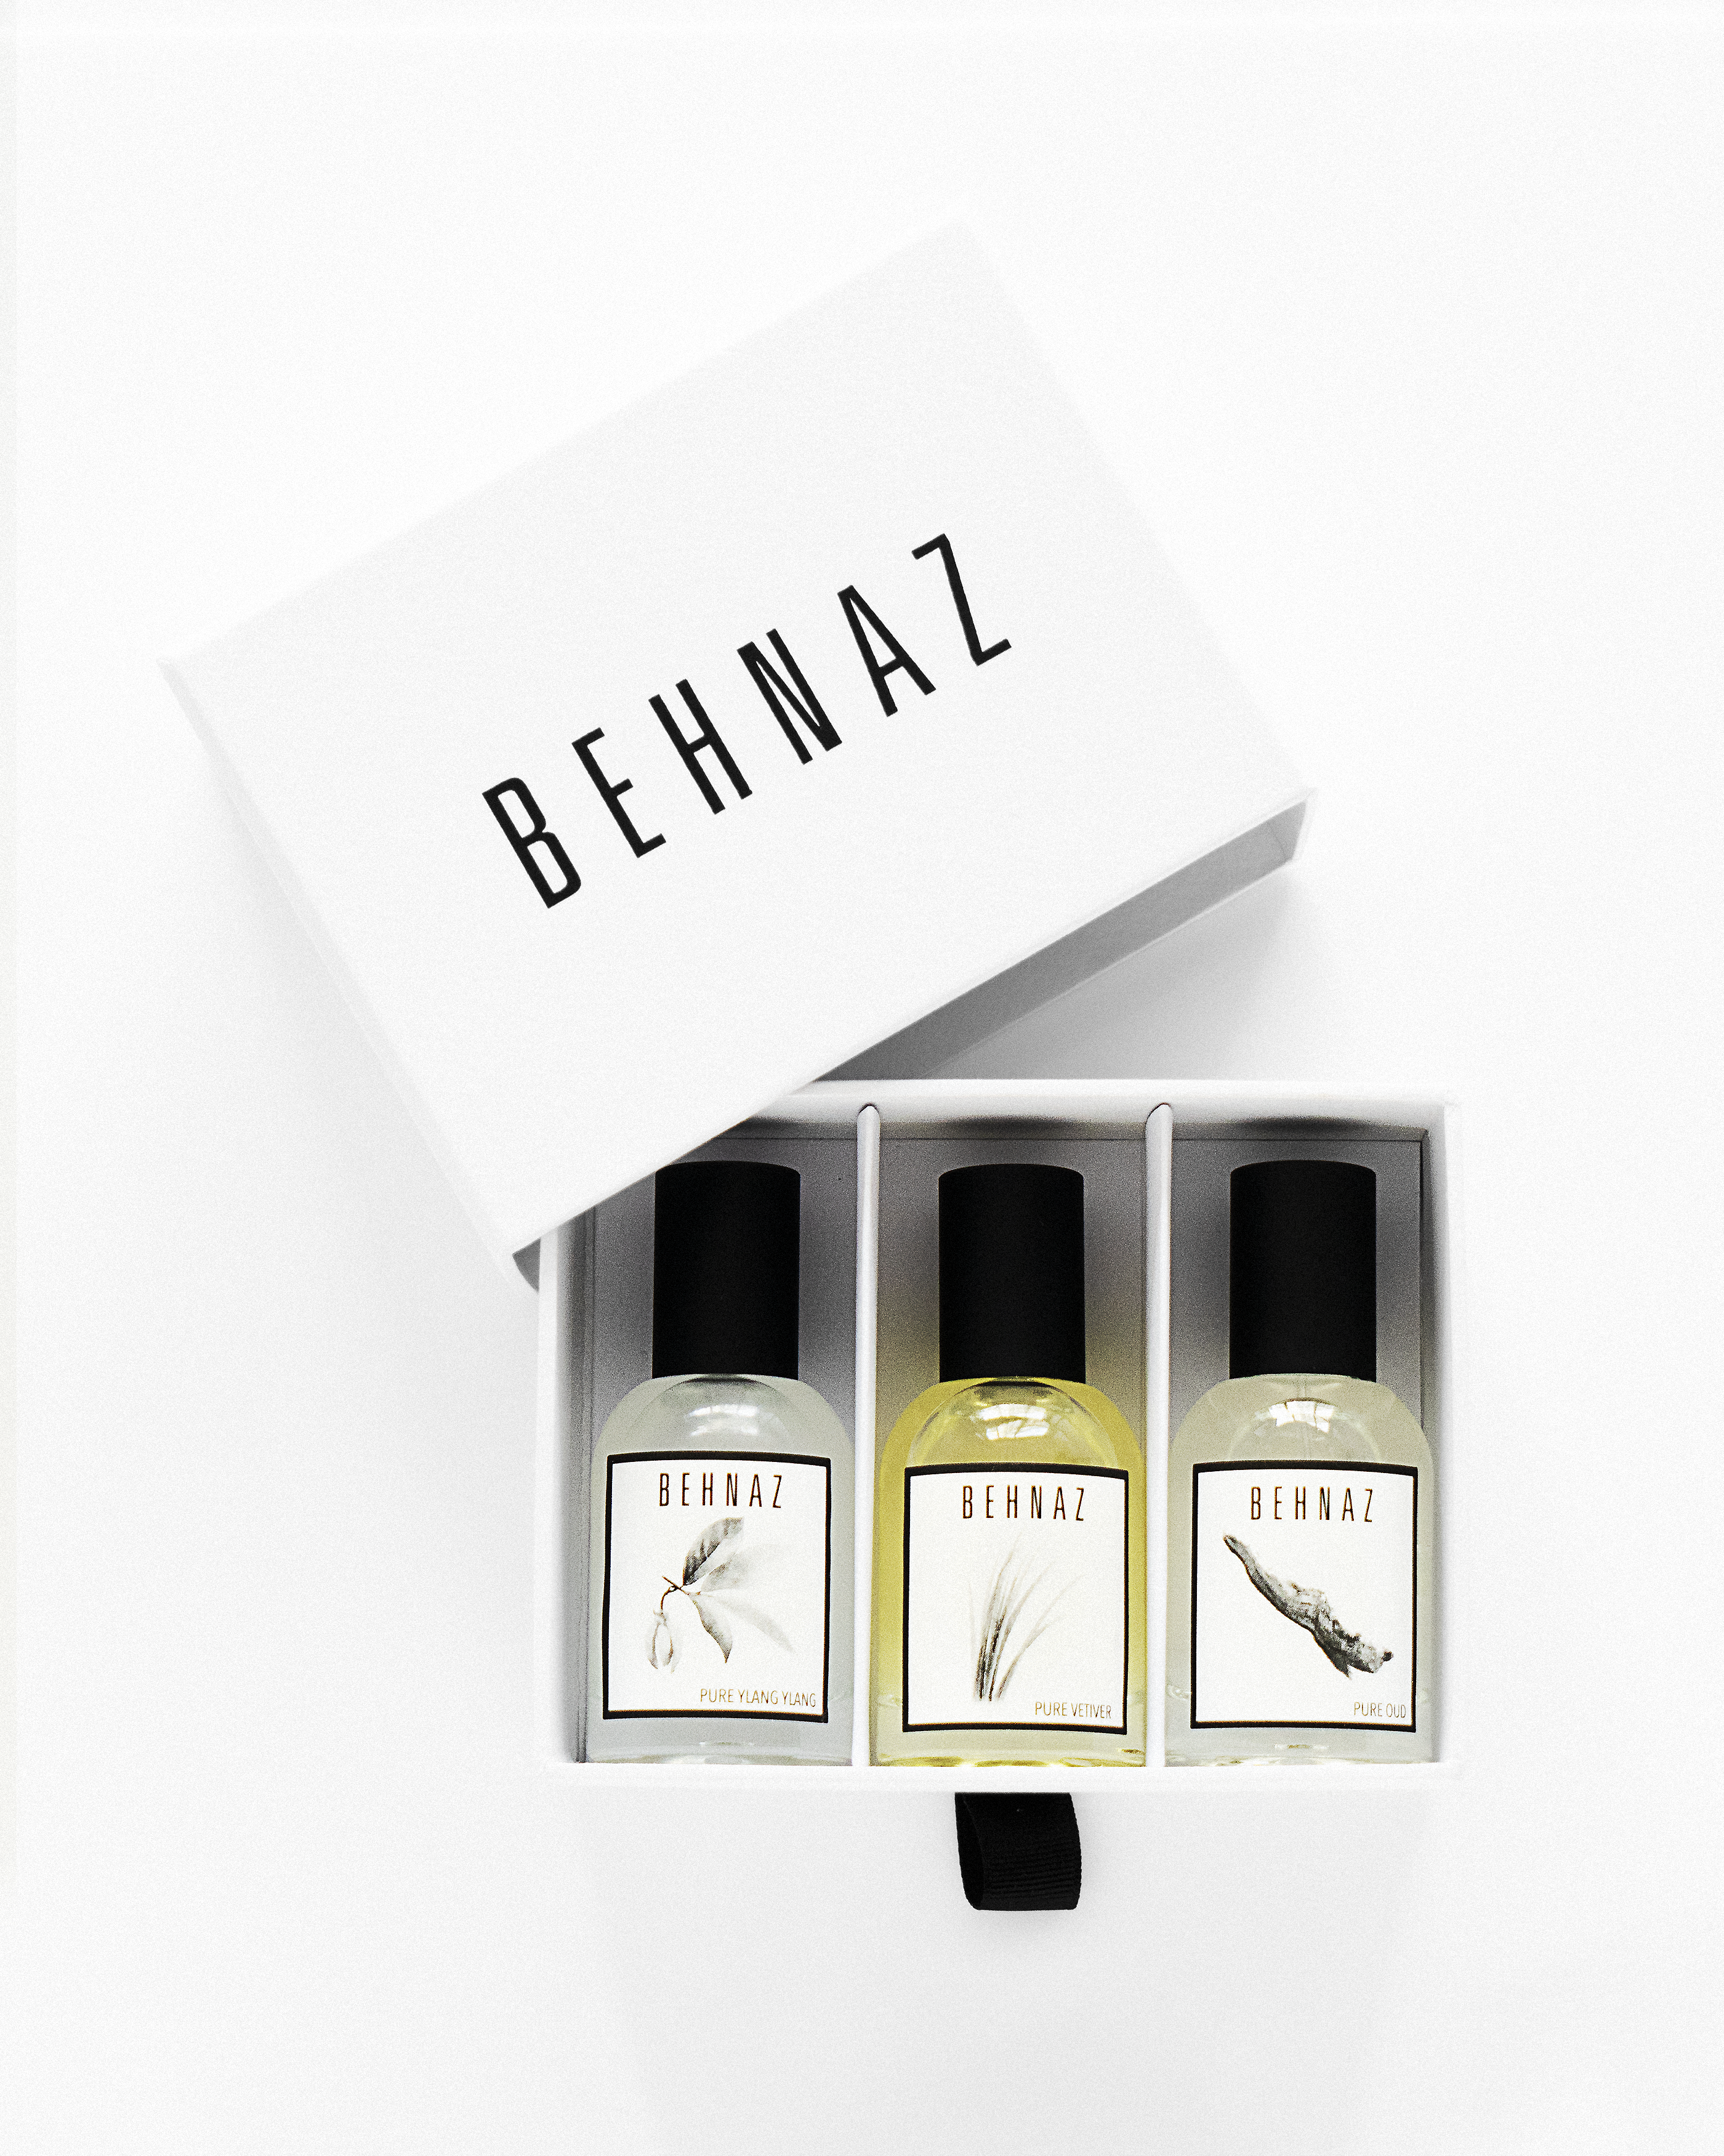 Natural perfume . Perfume gift box. Behnaz fragrance flight. Travel size perfume 